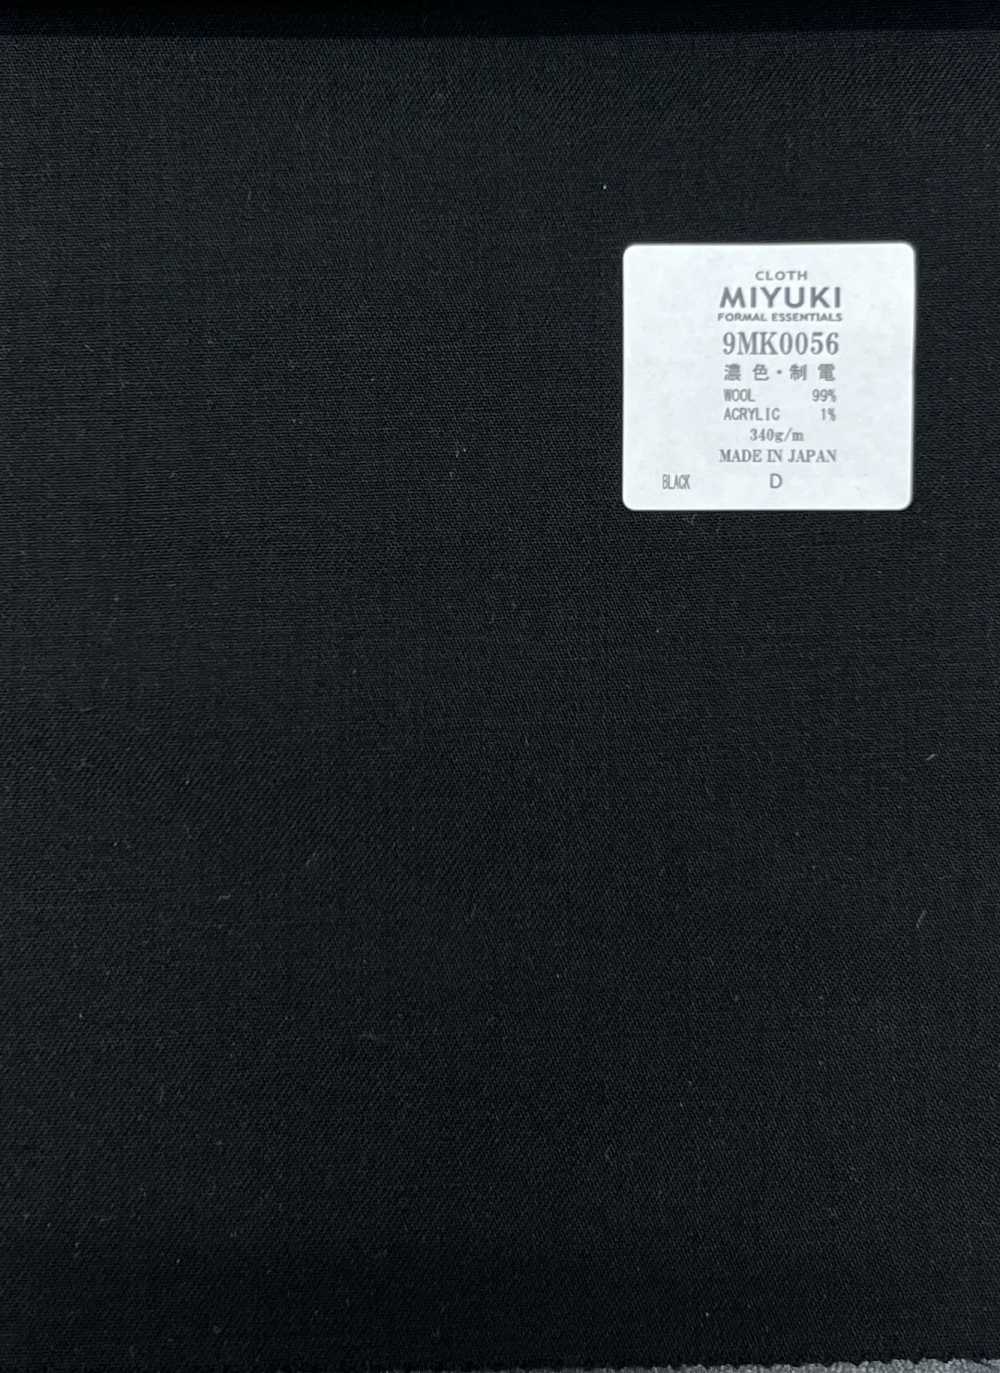 9MK0056 MIYUKI FORMAL[Textil]